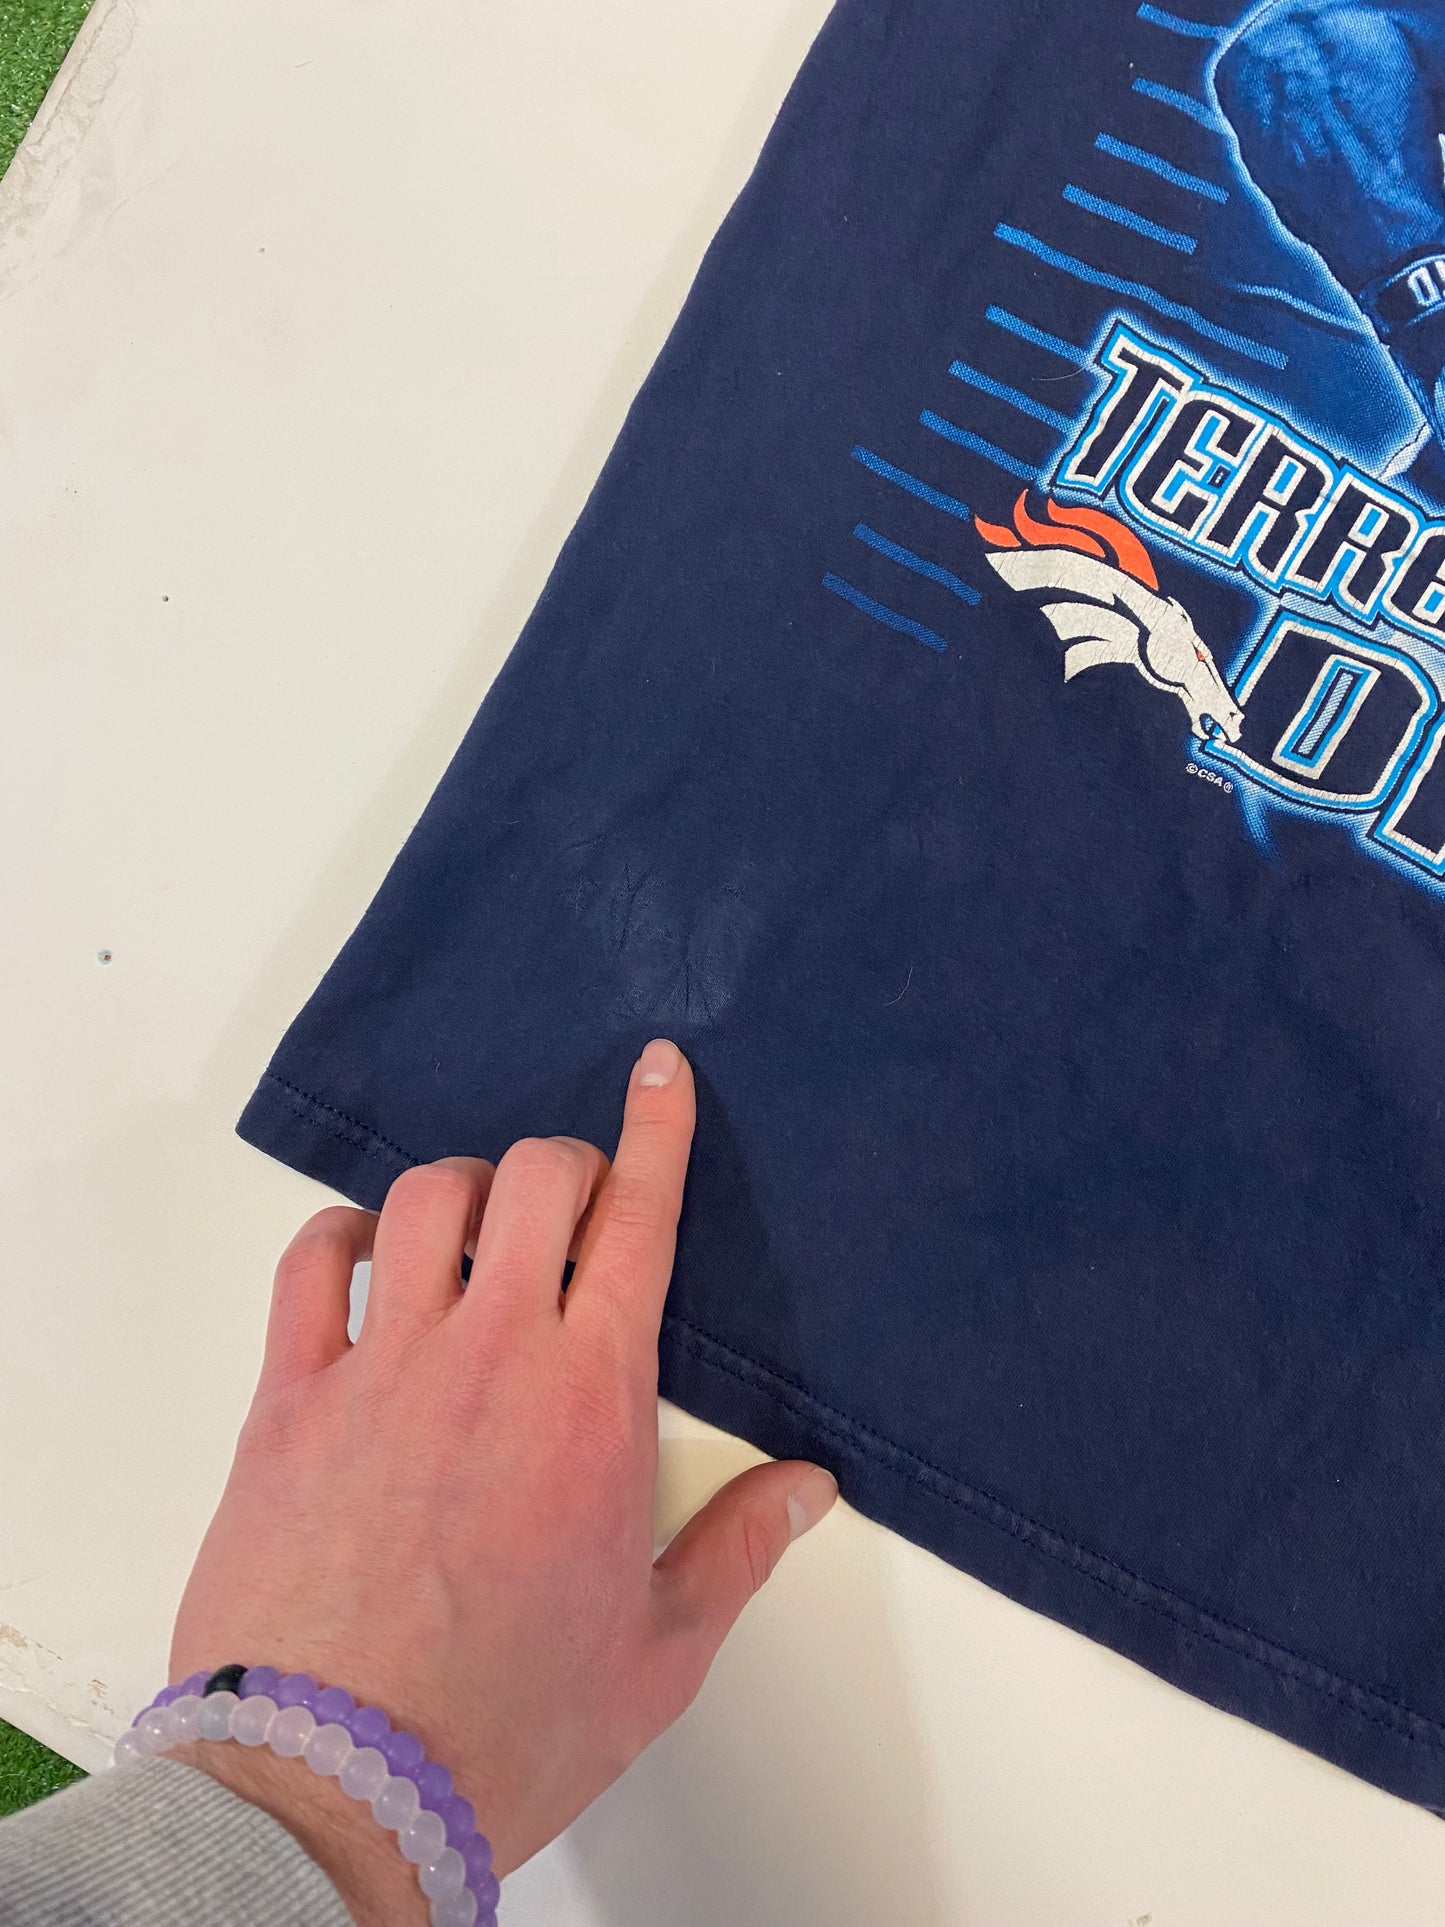 1990’s Denver Broncos Terrell Davis CSA T-Shirt L